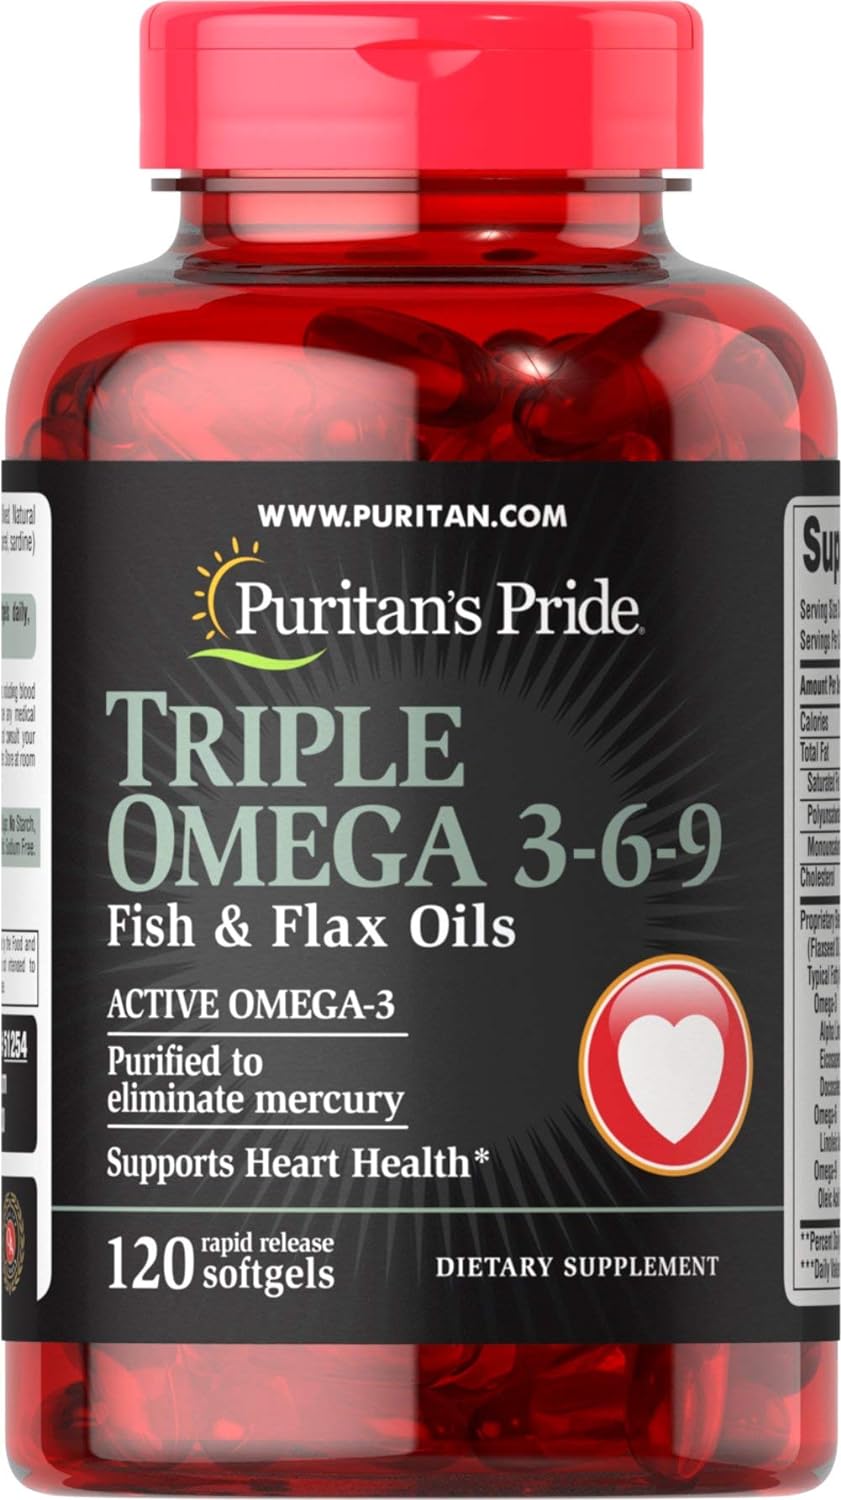 Puritan's Pride Triple Omega 3-6-9 Fish & Flax Oils